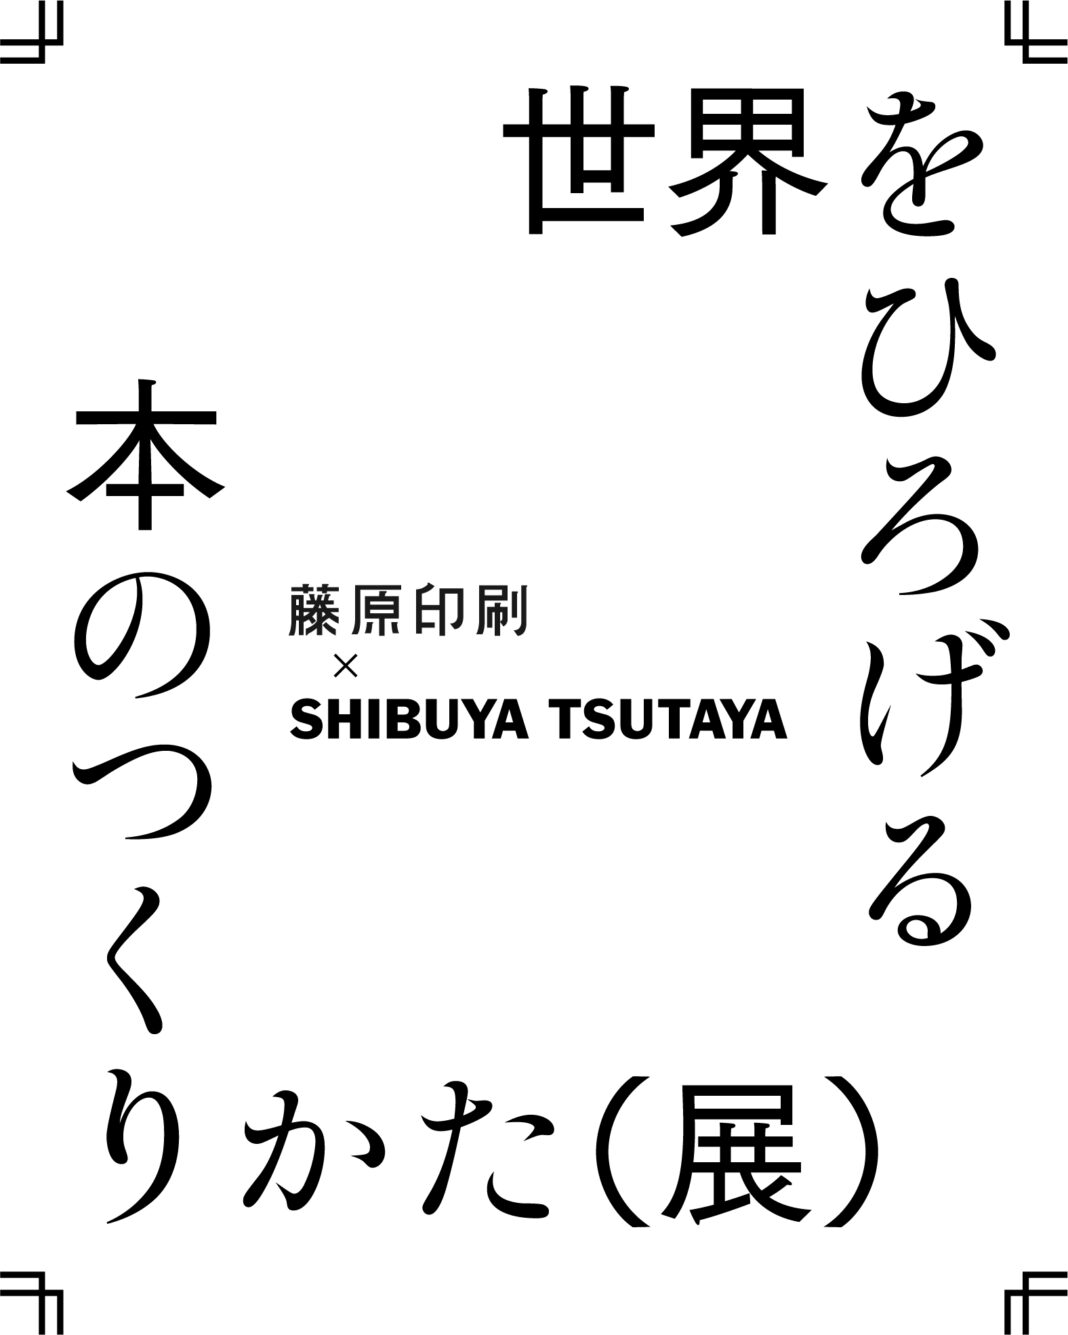 SHIBUYA TSUTAYA × 藤原印刷『世界をひろげる本のつくりかた(展)』POPUP開催決定！のメイン画像